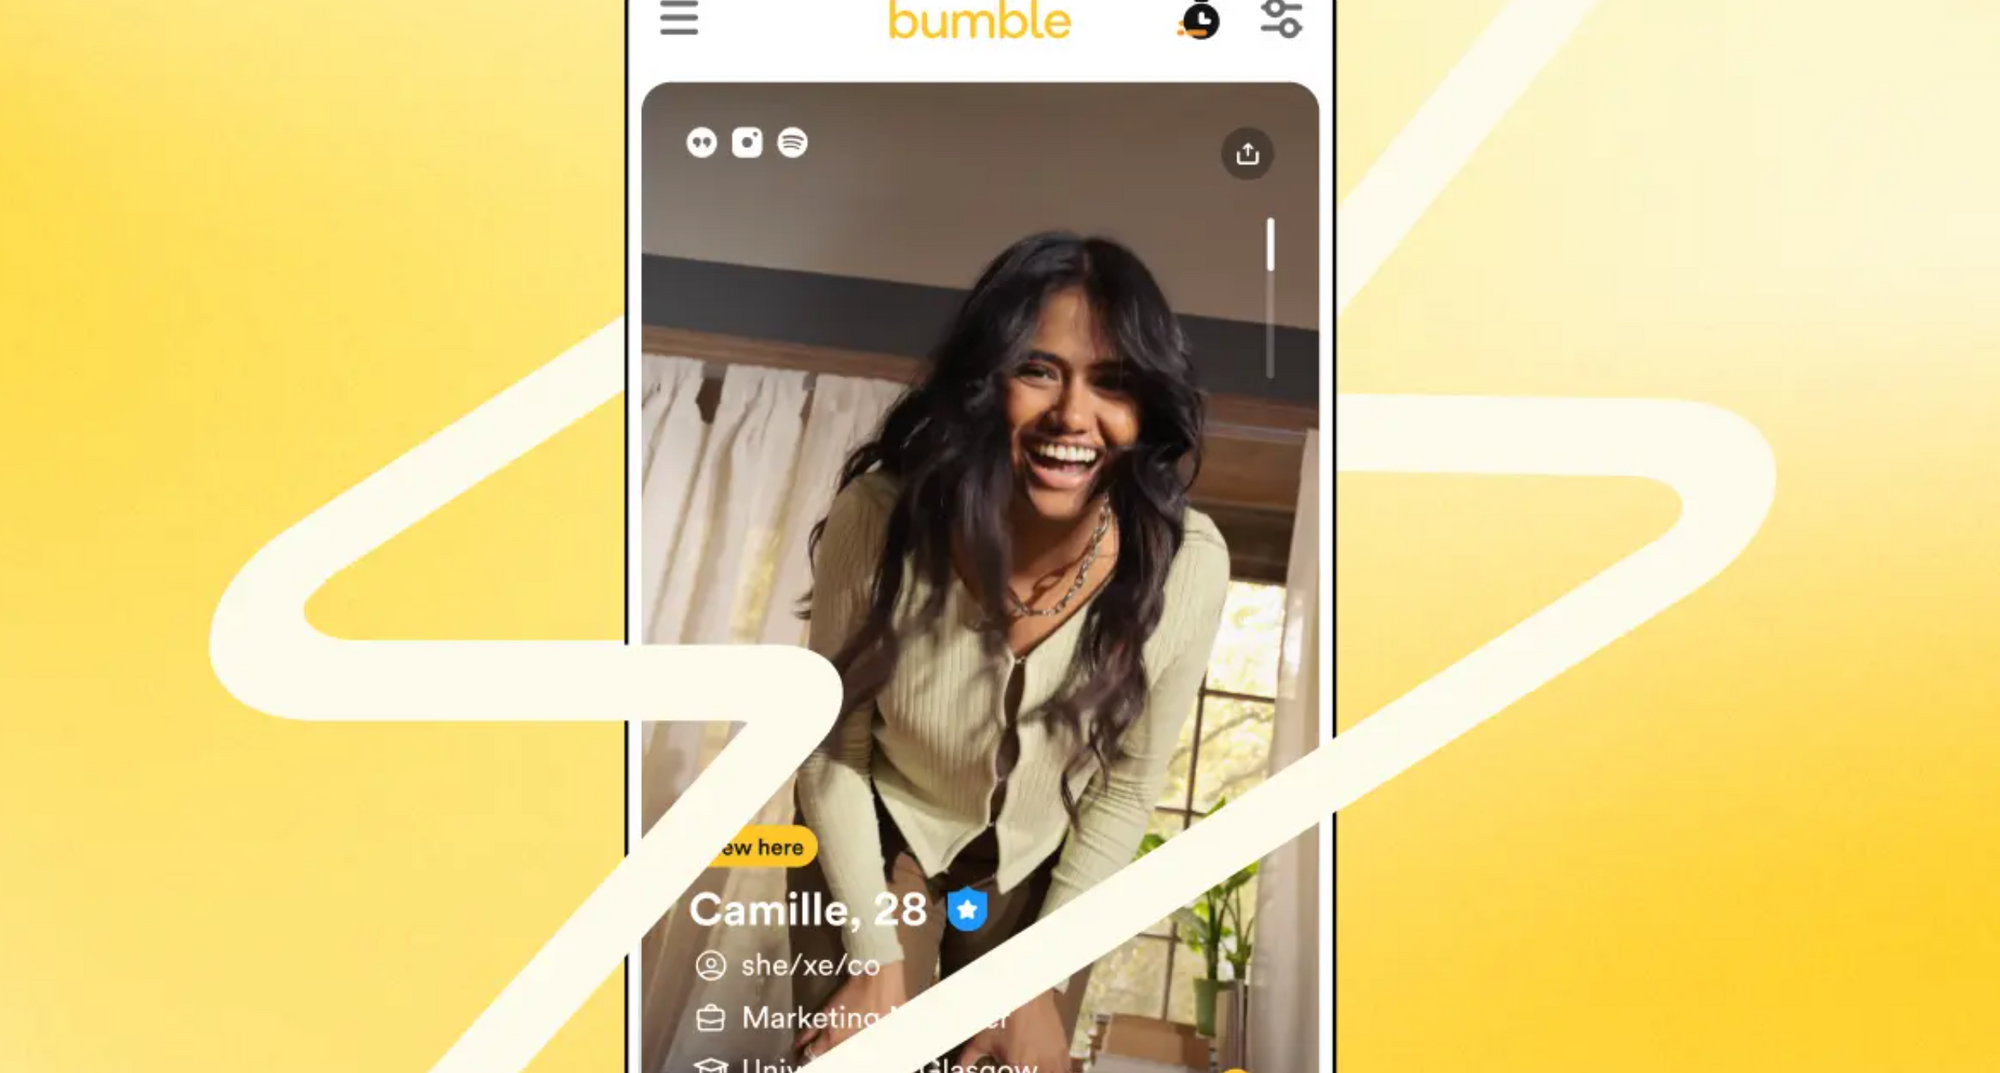 bumble dating app mobile screenshot